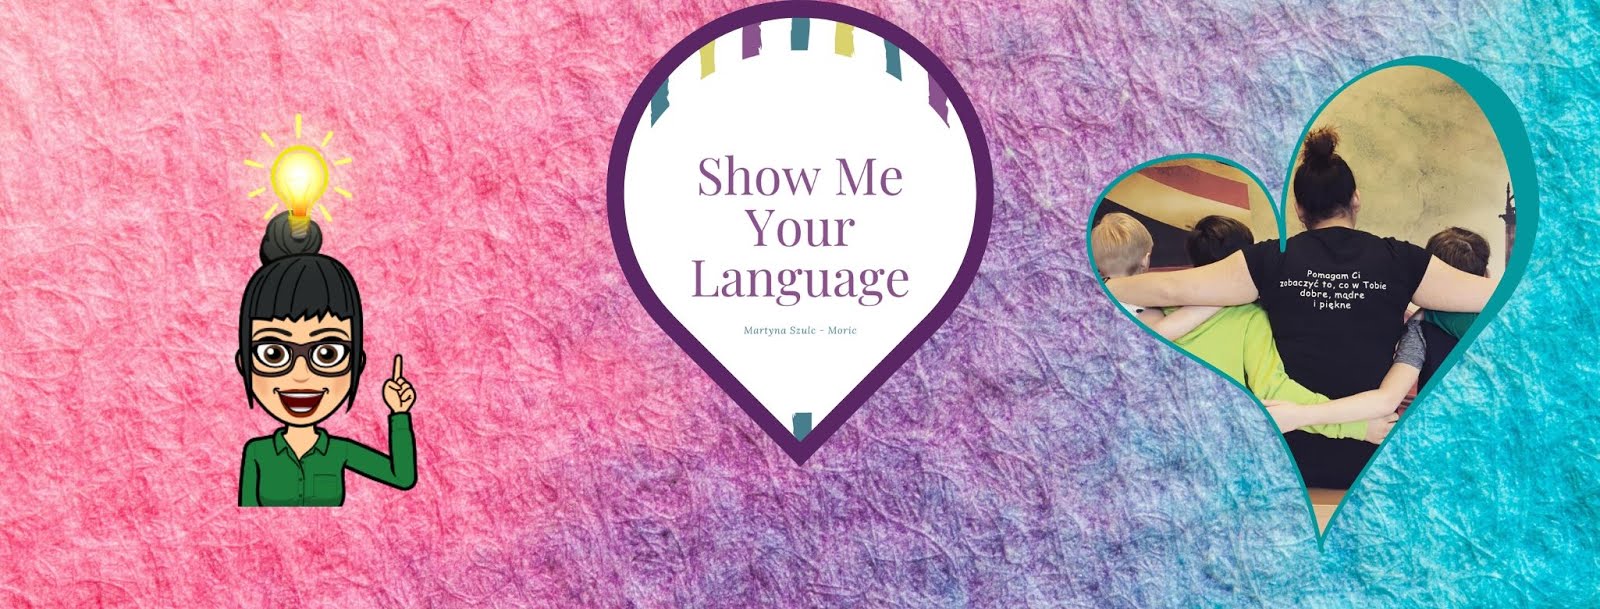 Show me your language